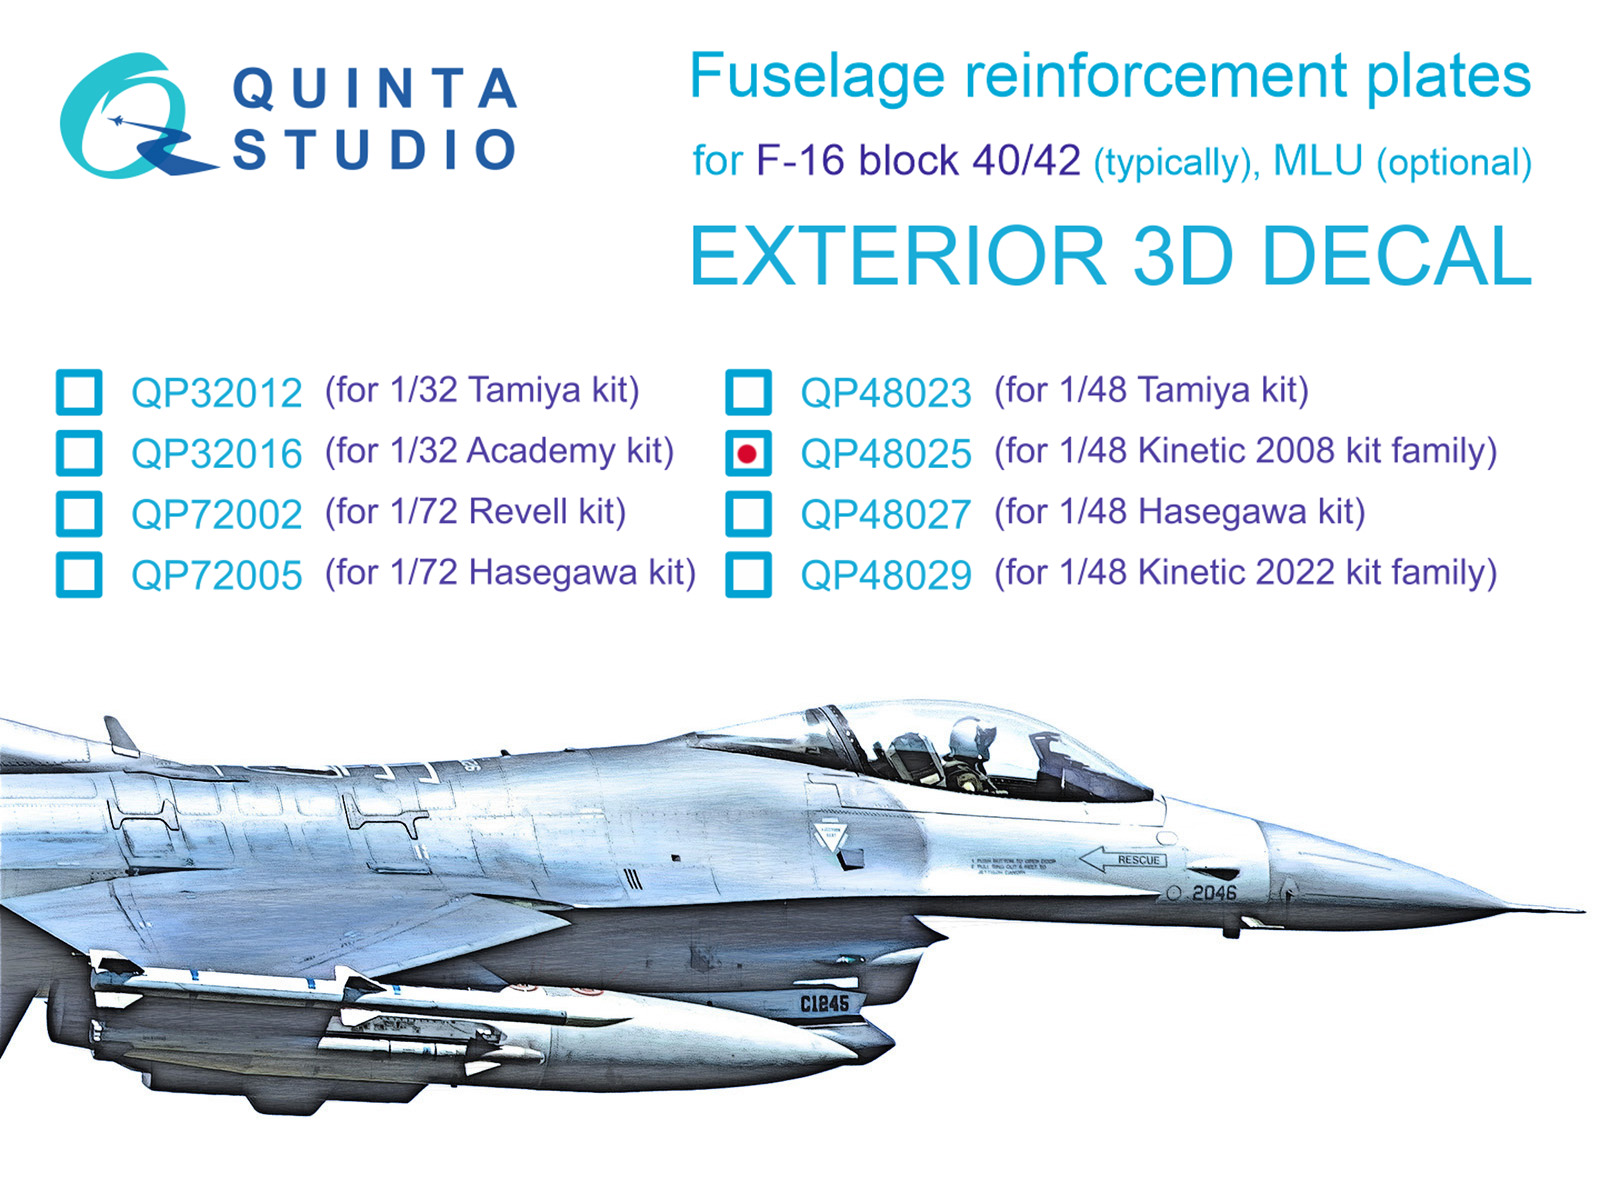 QP48025  декали  Усиливающие накладки для F-16 block 40/42 (Kinetic 2008г. разработки)  (1:48)